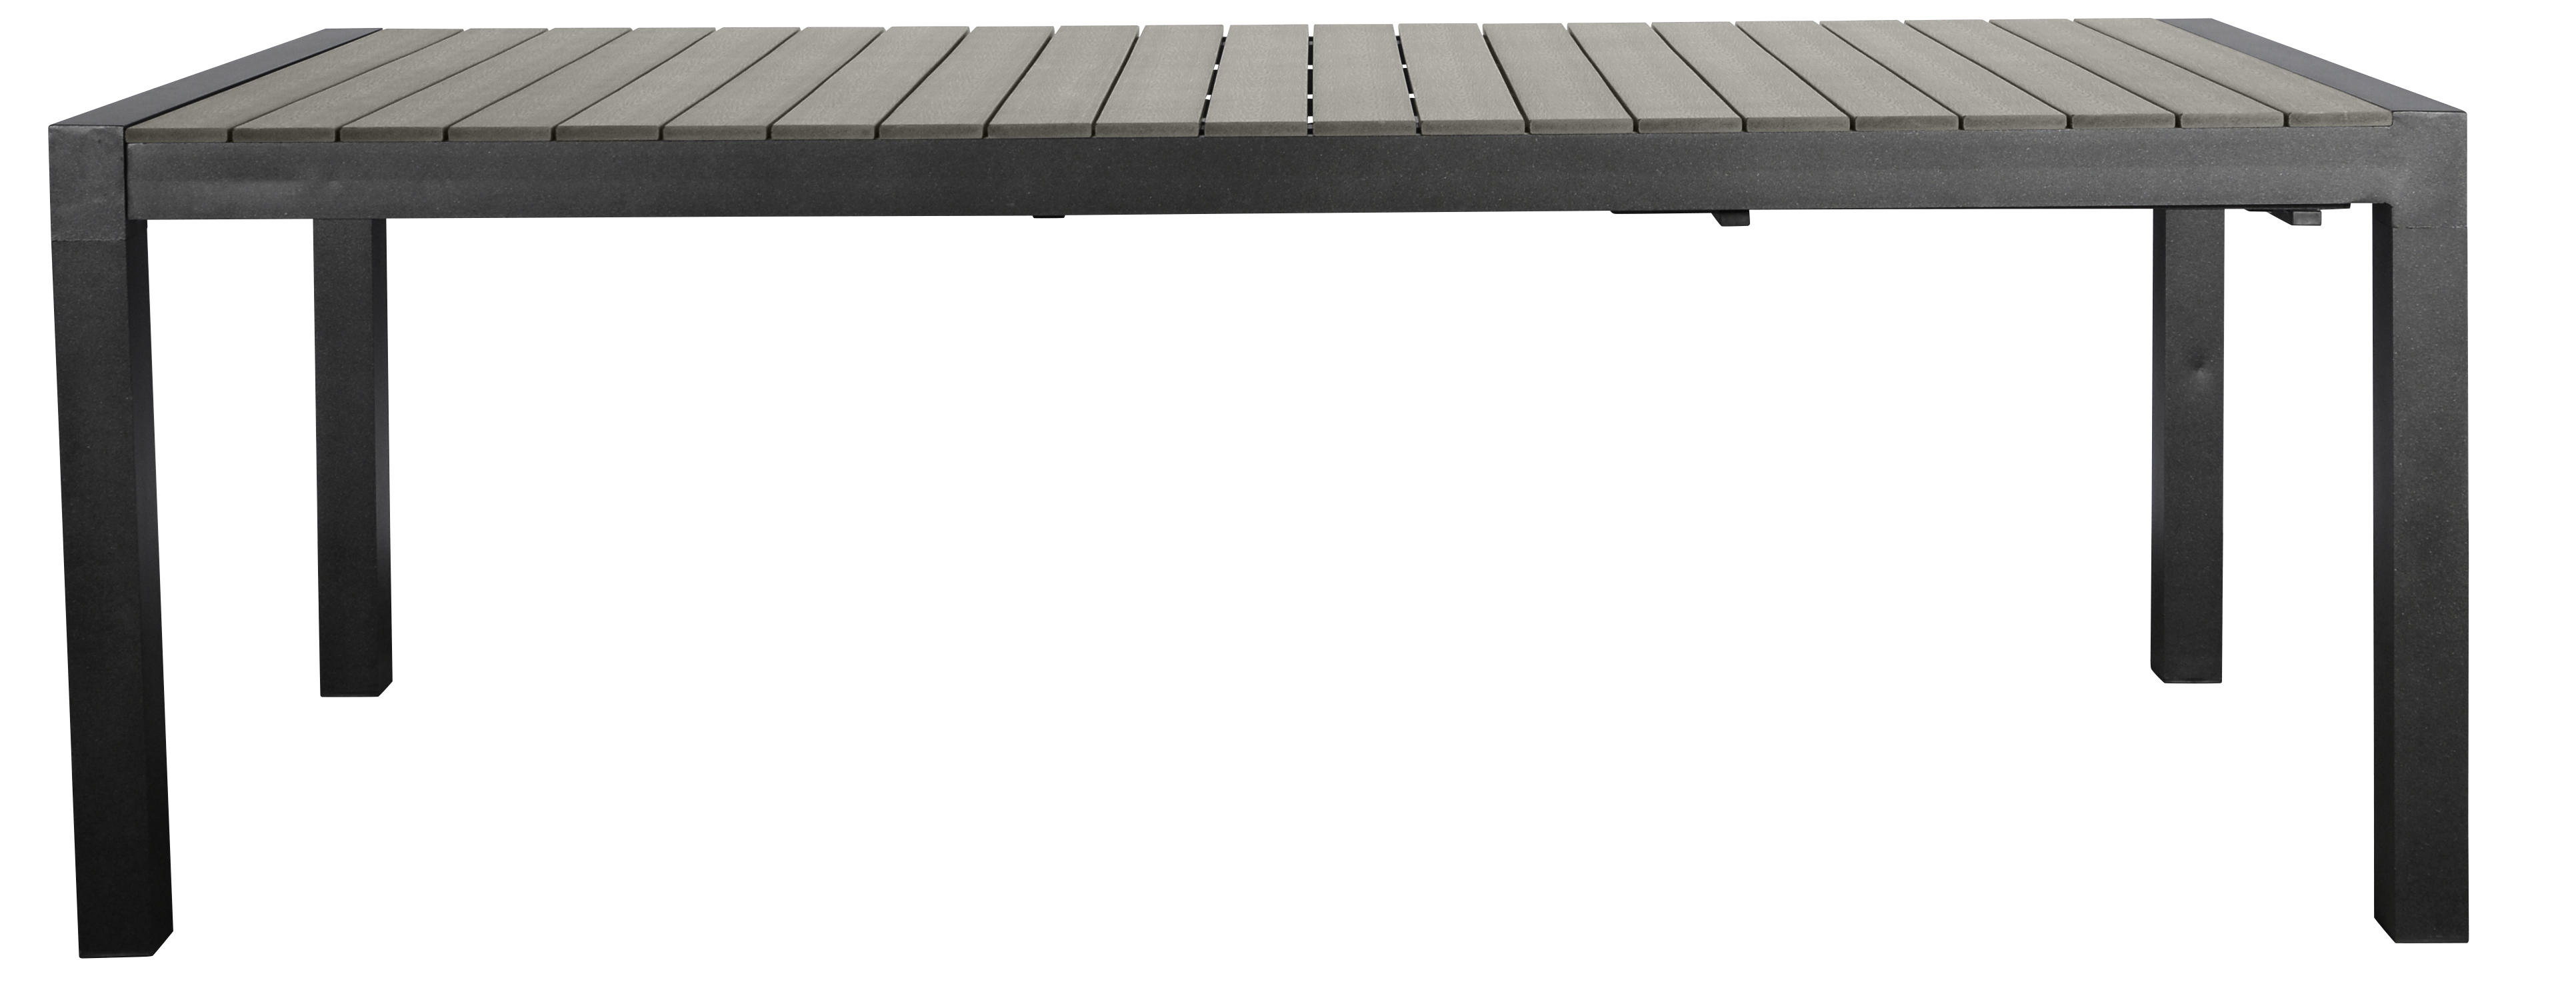 Living Outdoor - Lyoe Garden Table 223/283/343 x 100 cm. - Aluminium/Polywood - Black/Grey Oak (629020)